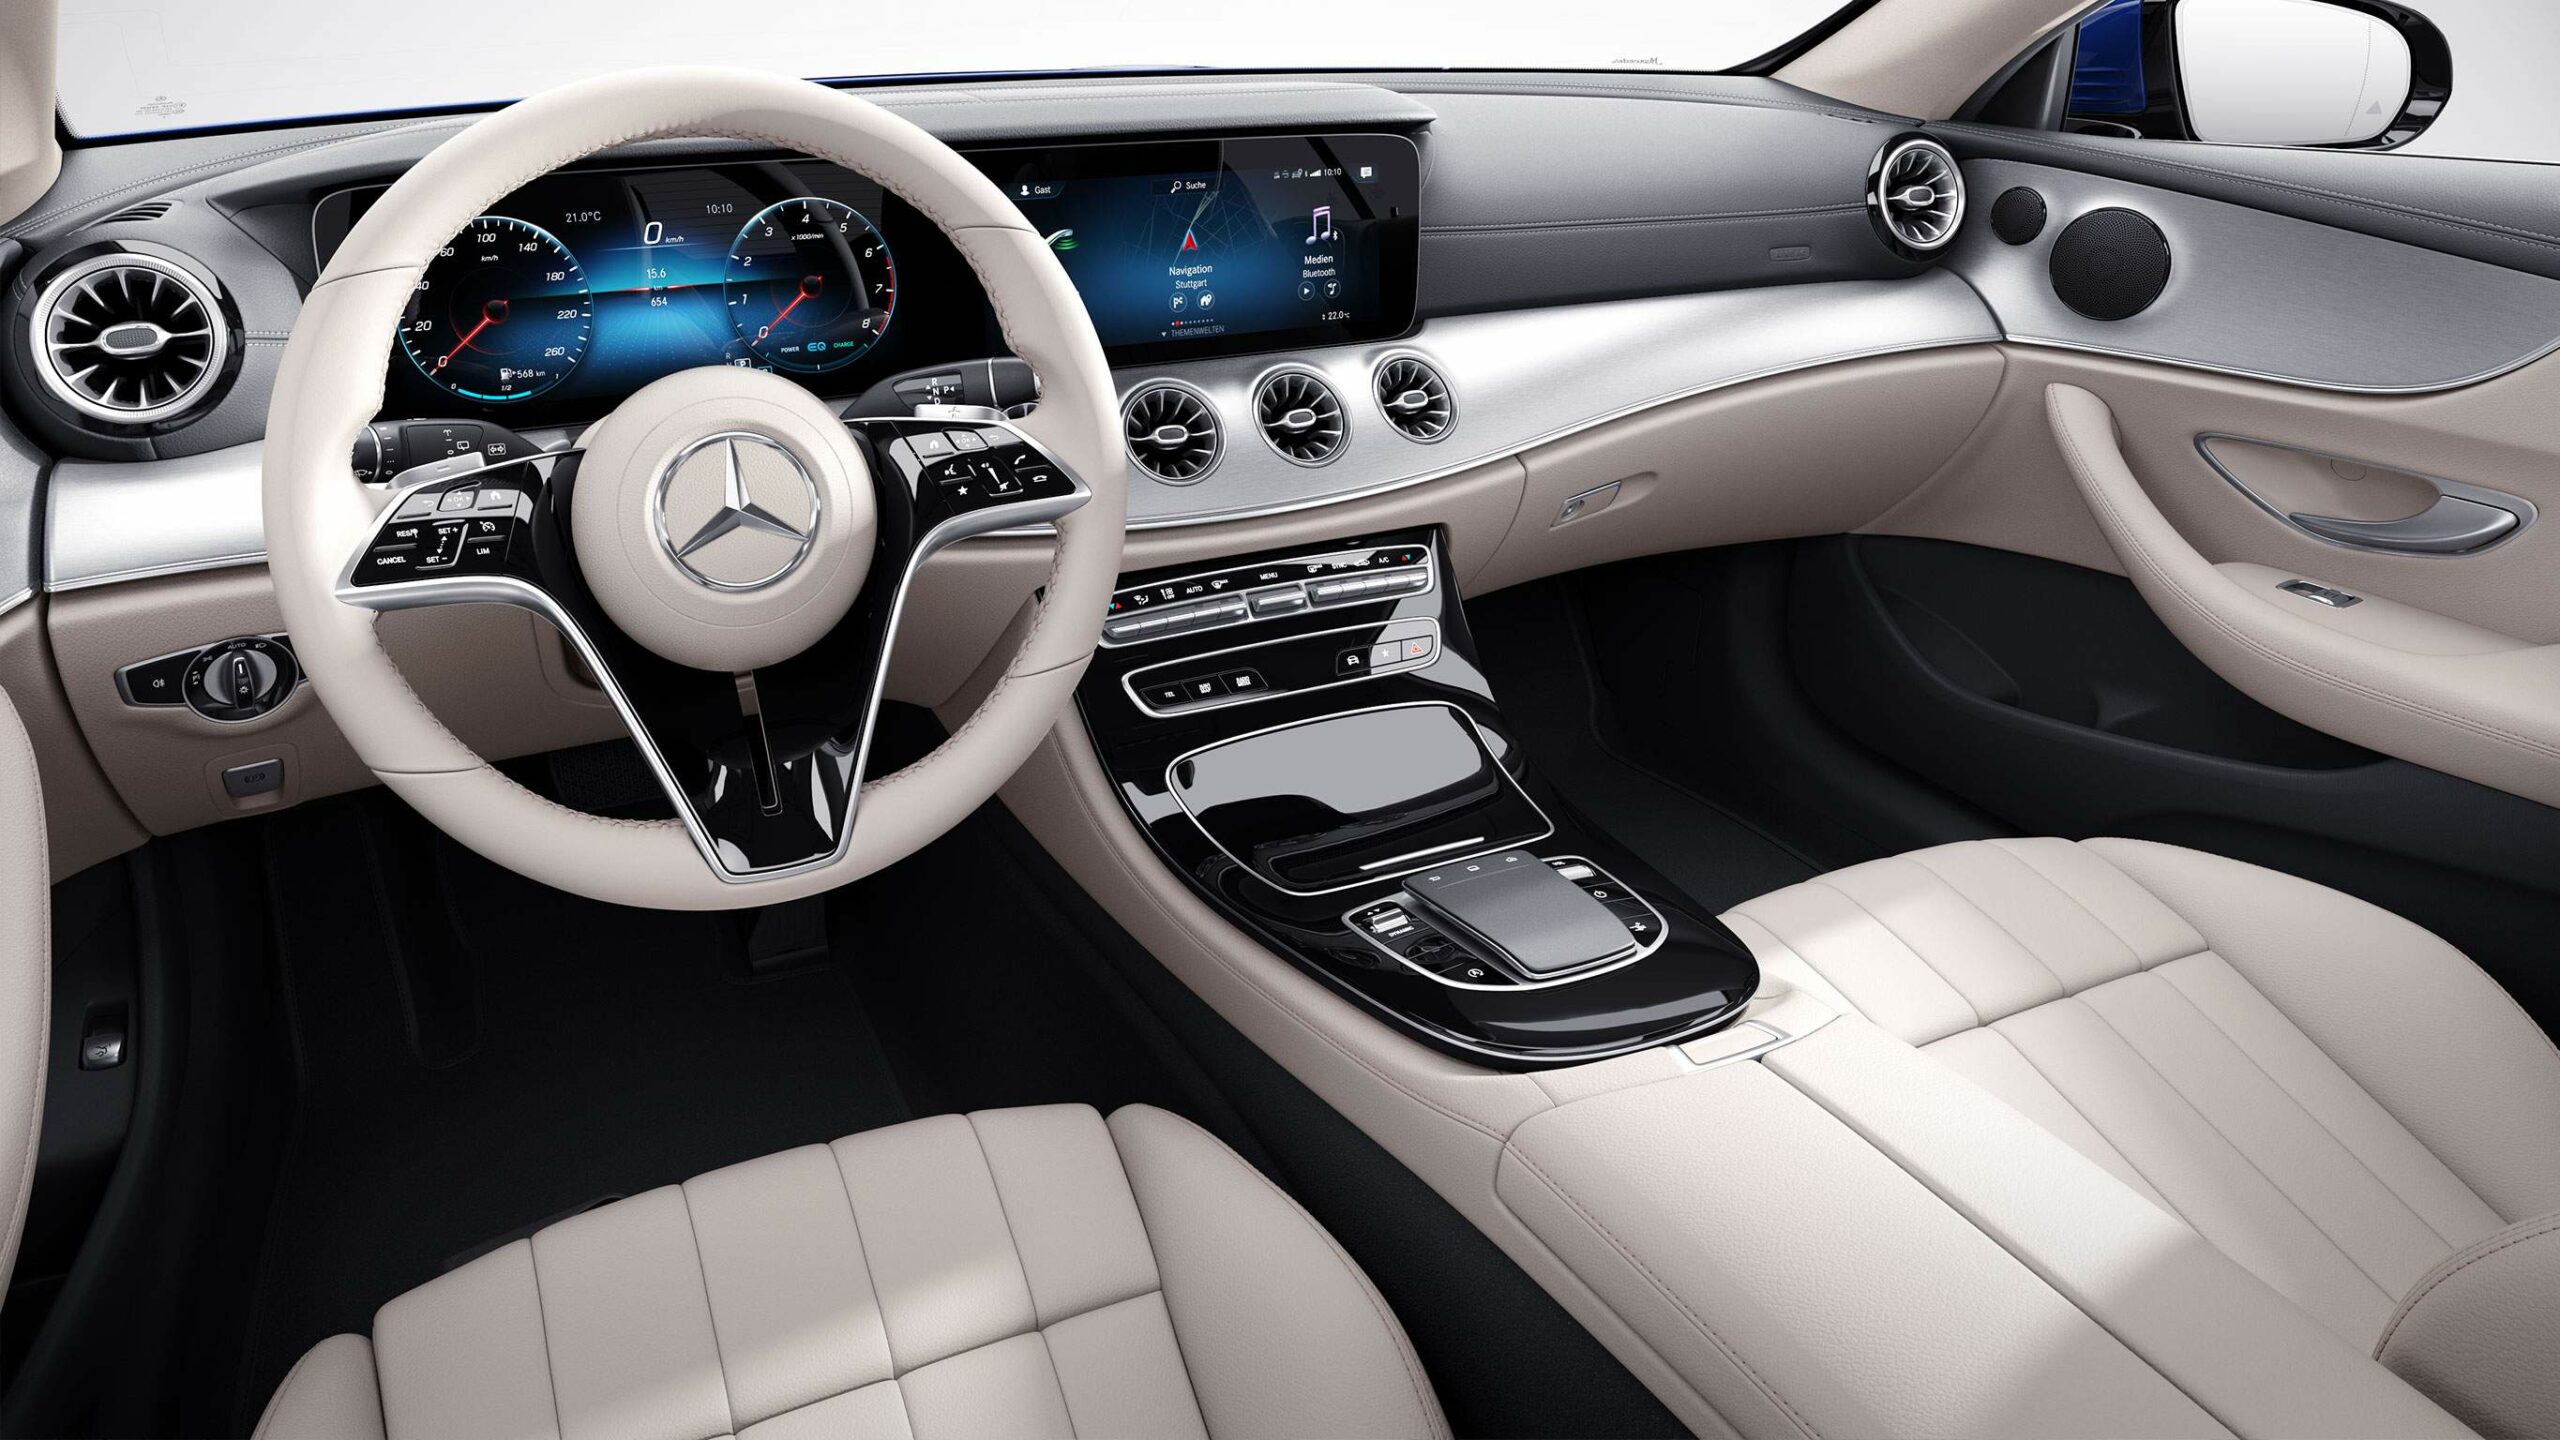 Diseño interior de la Clase E Coupe de Mercedes-Benz, en blanco